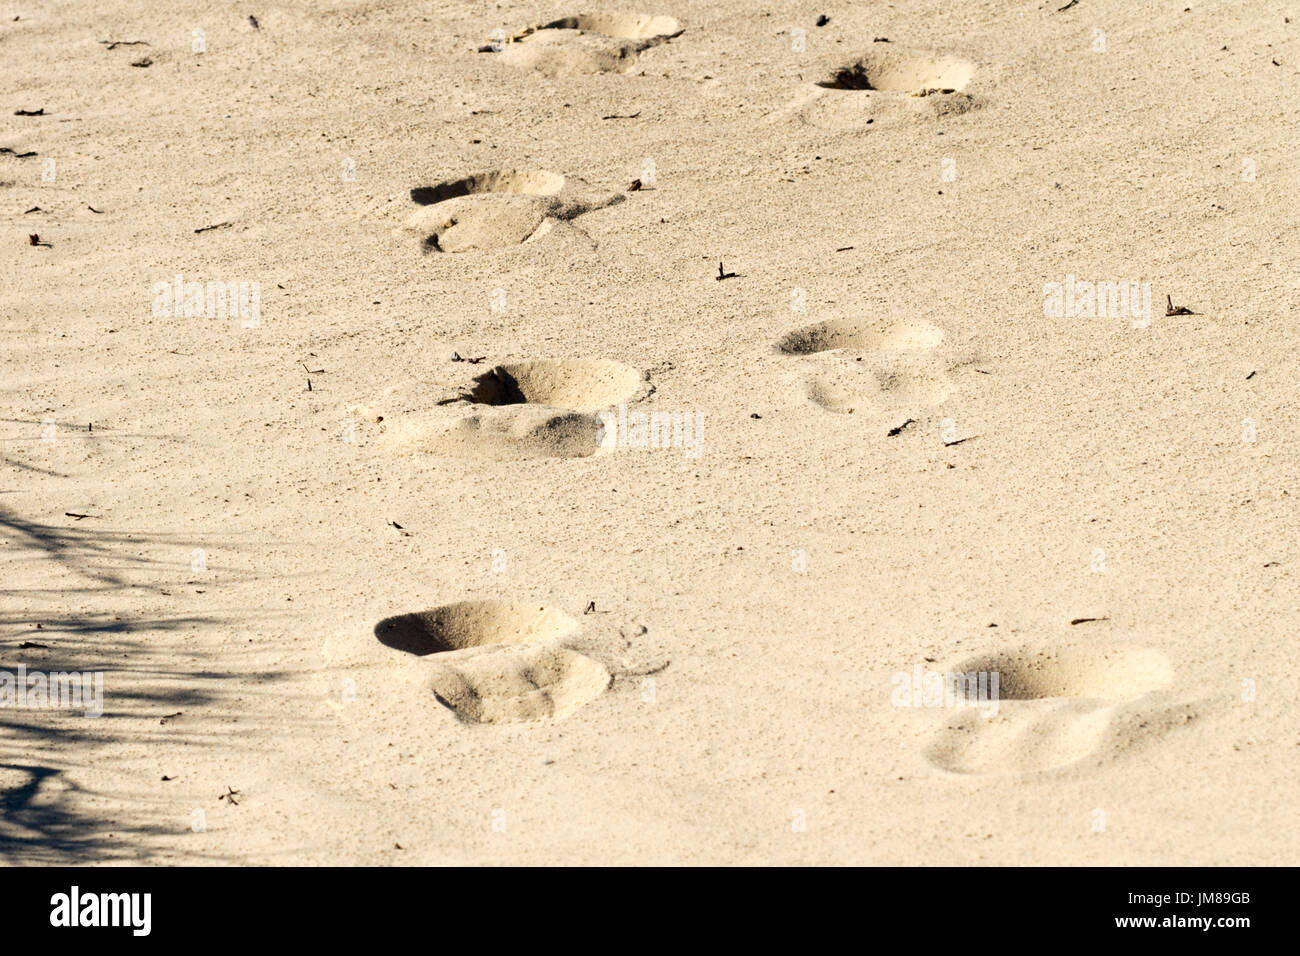 Footprints on yellow sand horizontal image Stock Photo